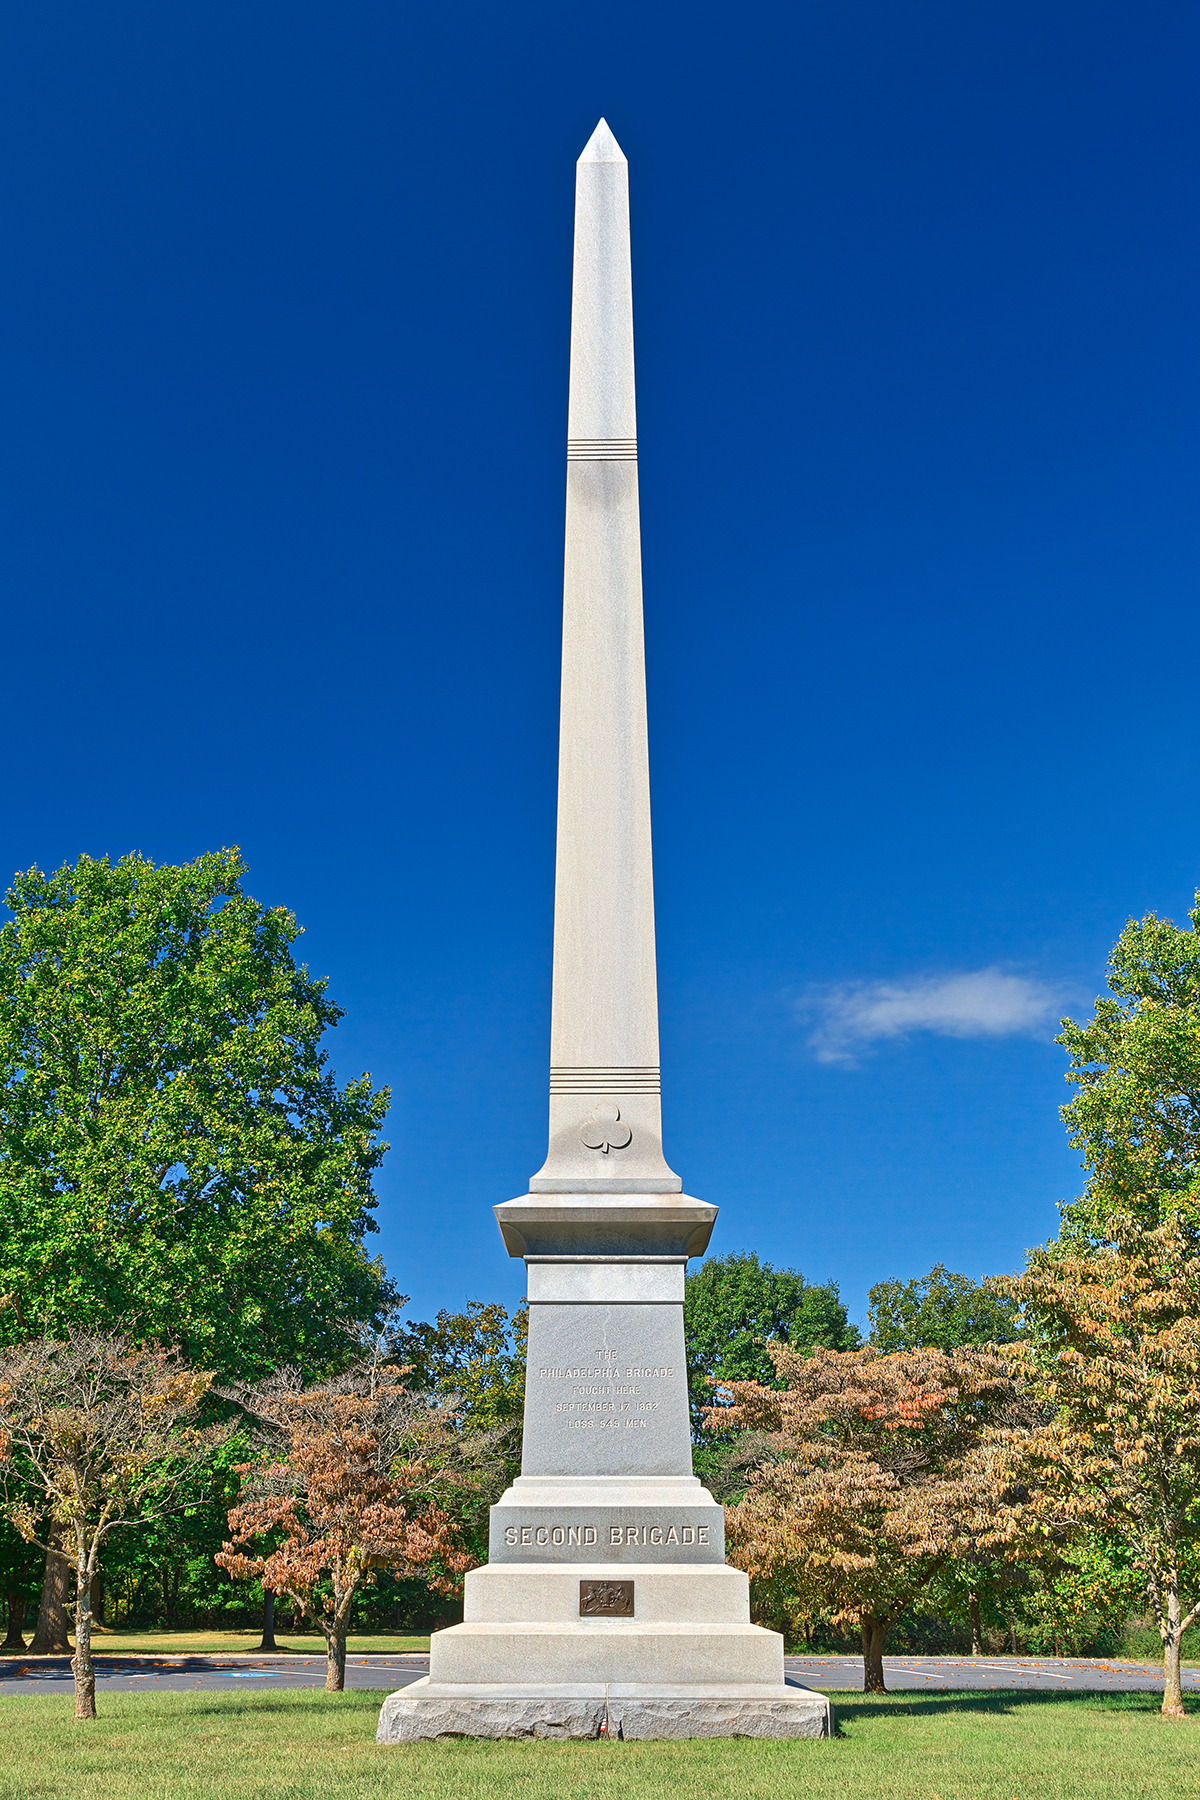 Philadelphia second brigade monument - hdr photo